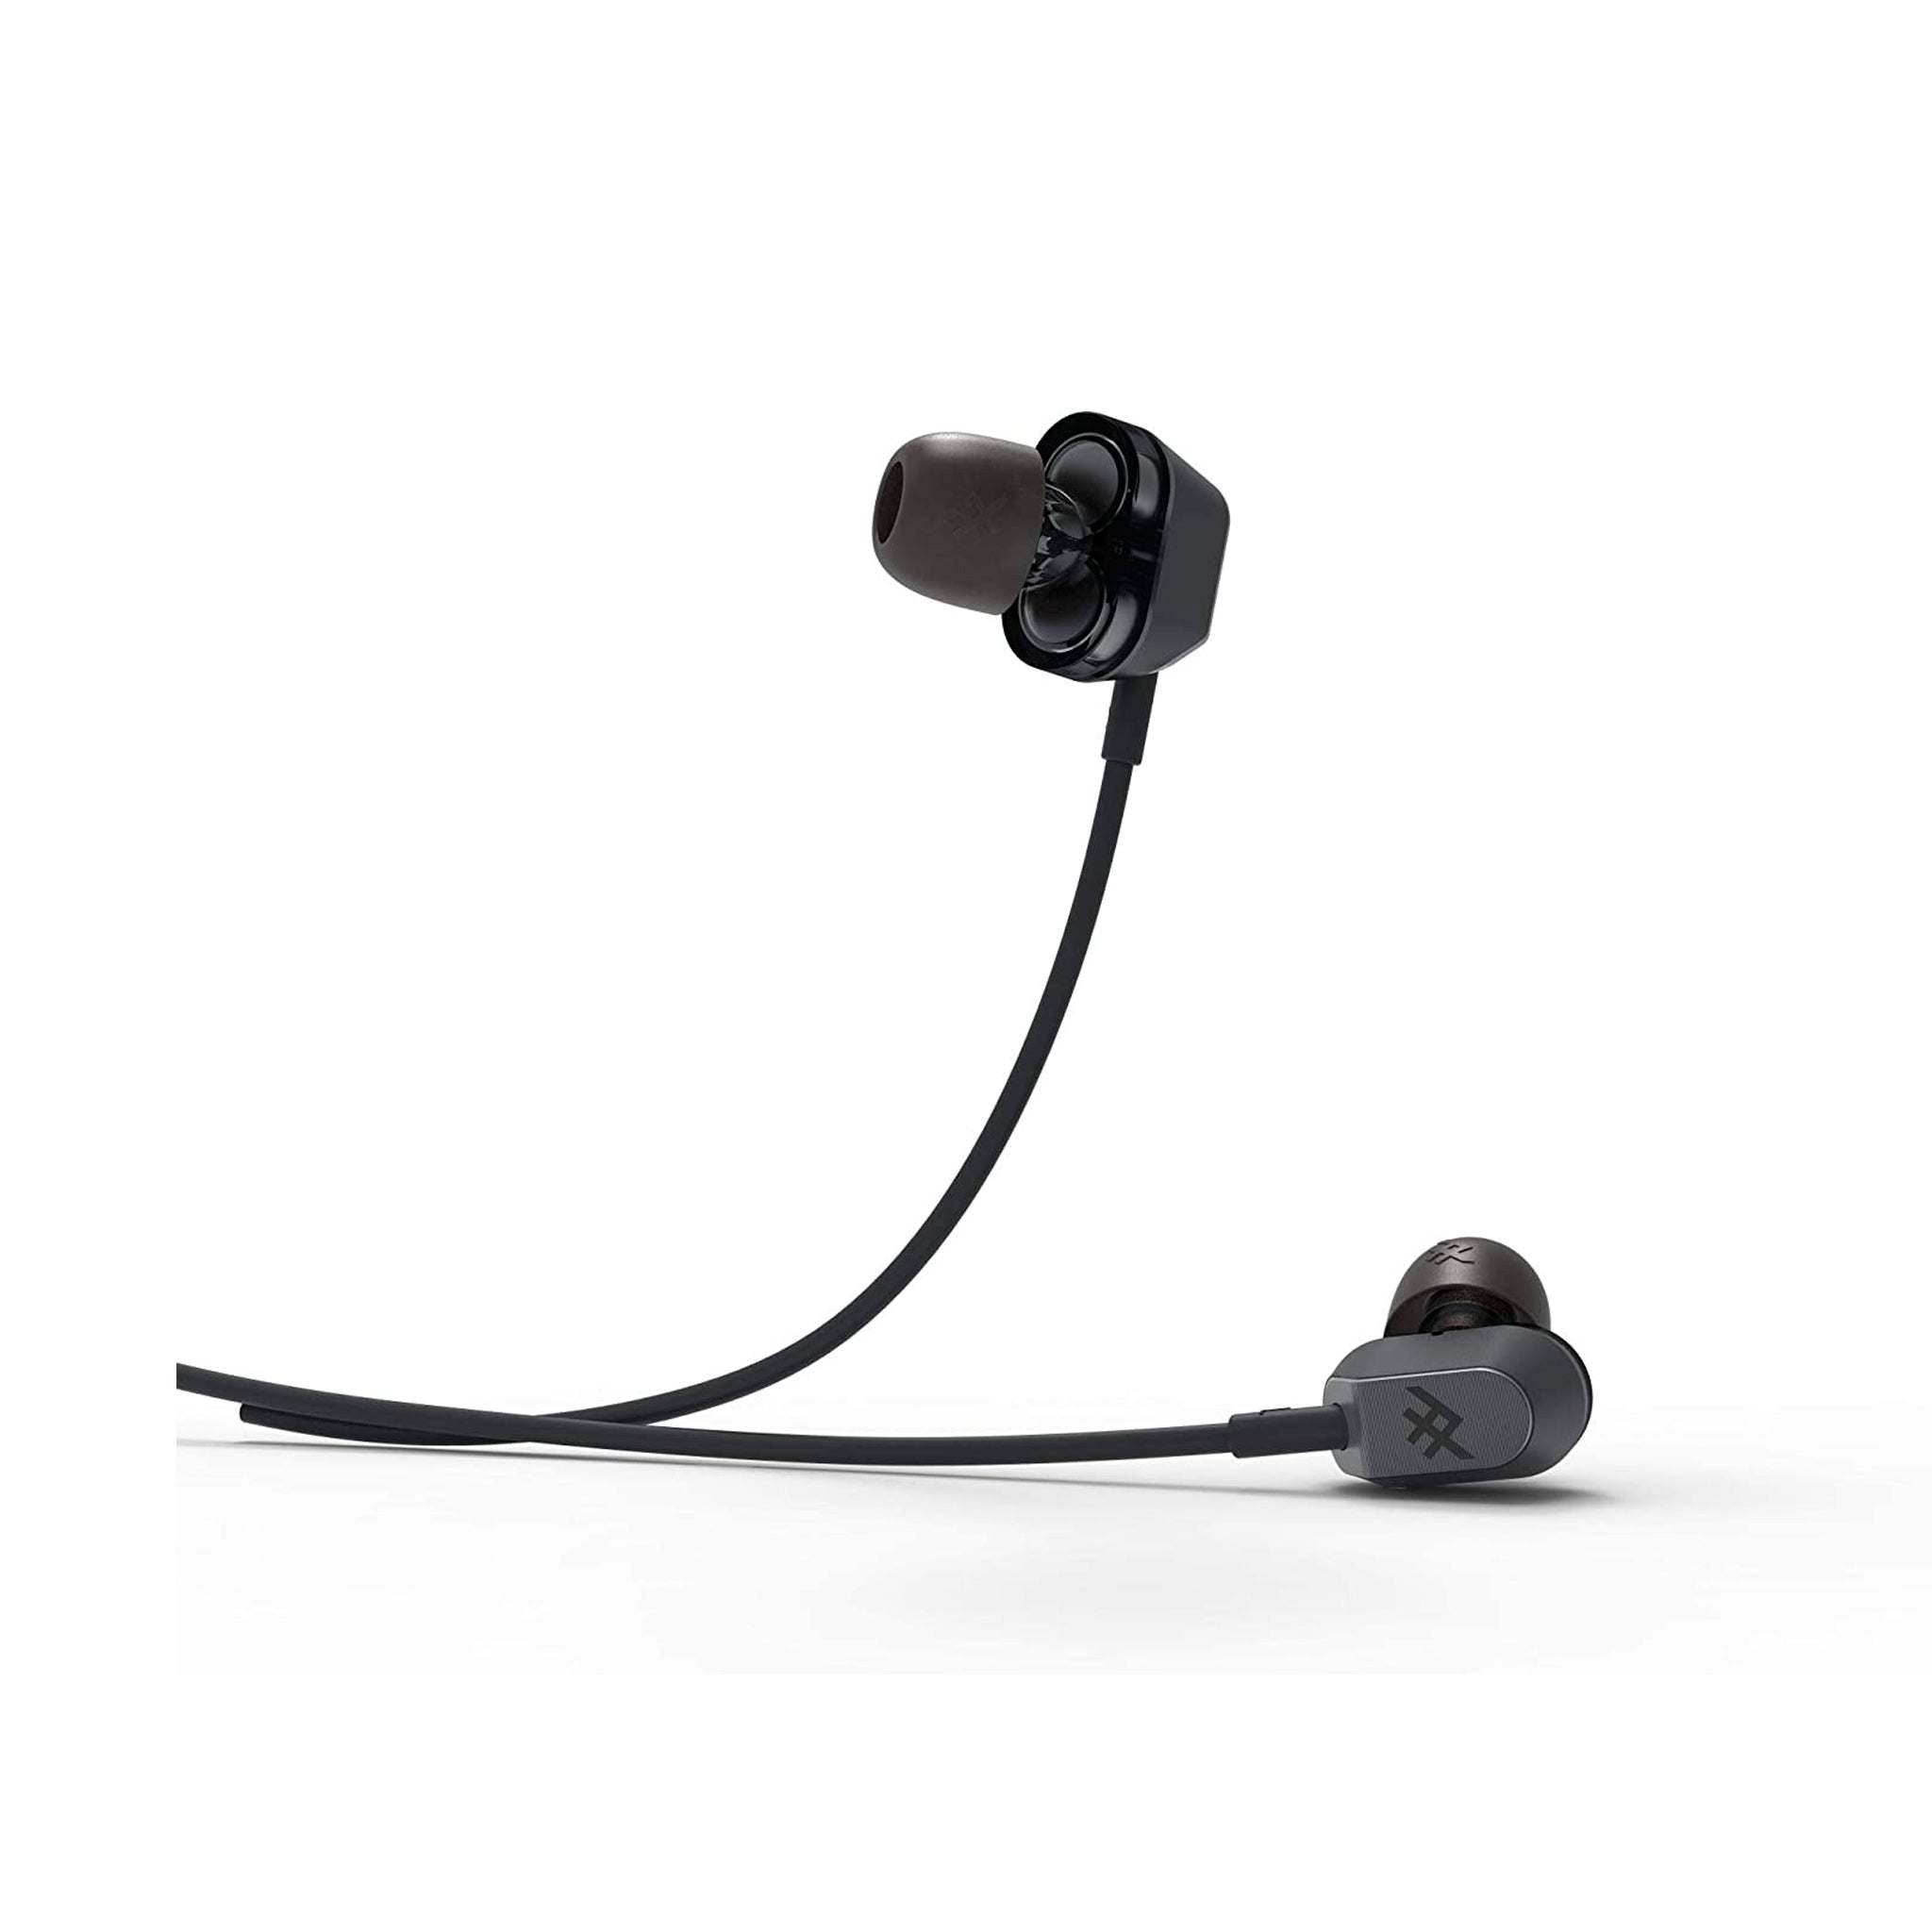 Ifrogz - Sound Hub Xd2 In Ear Bluetooth Headphones - Black